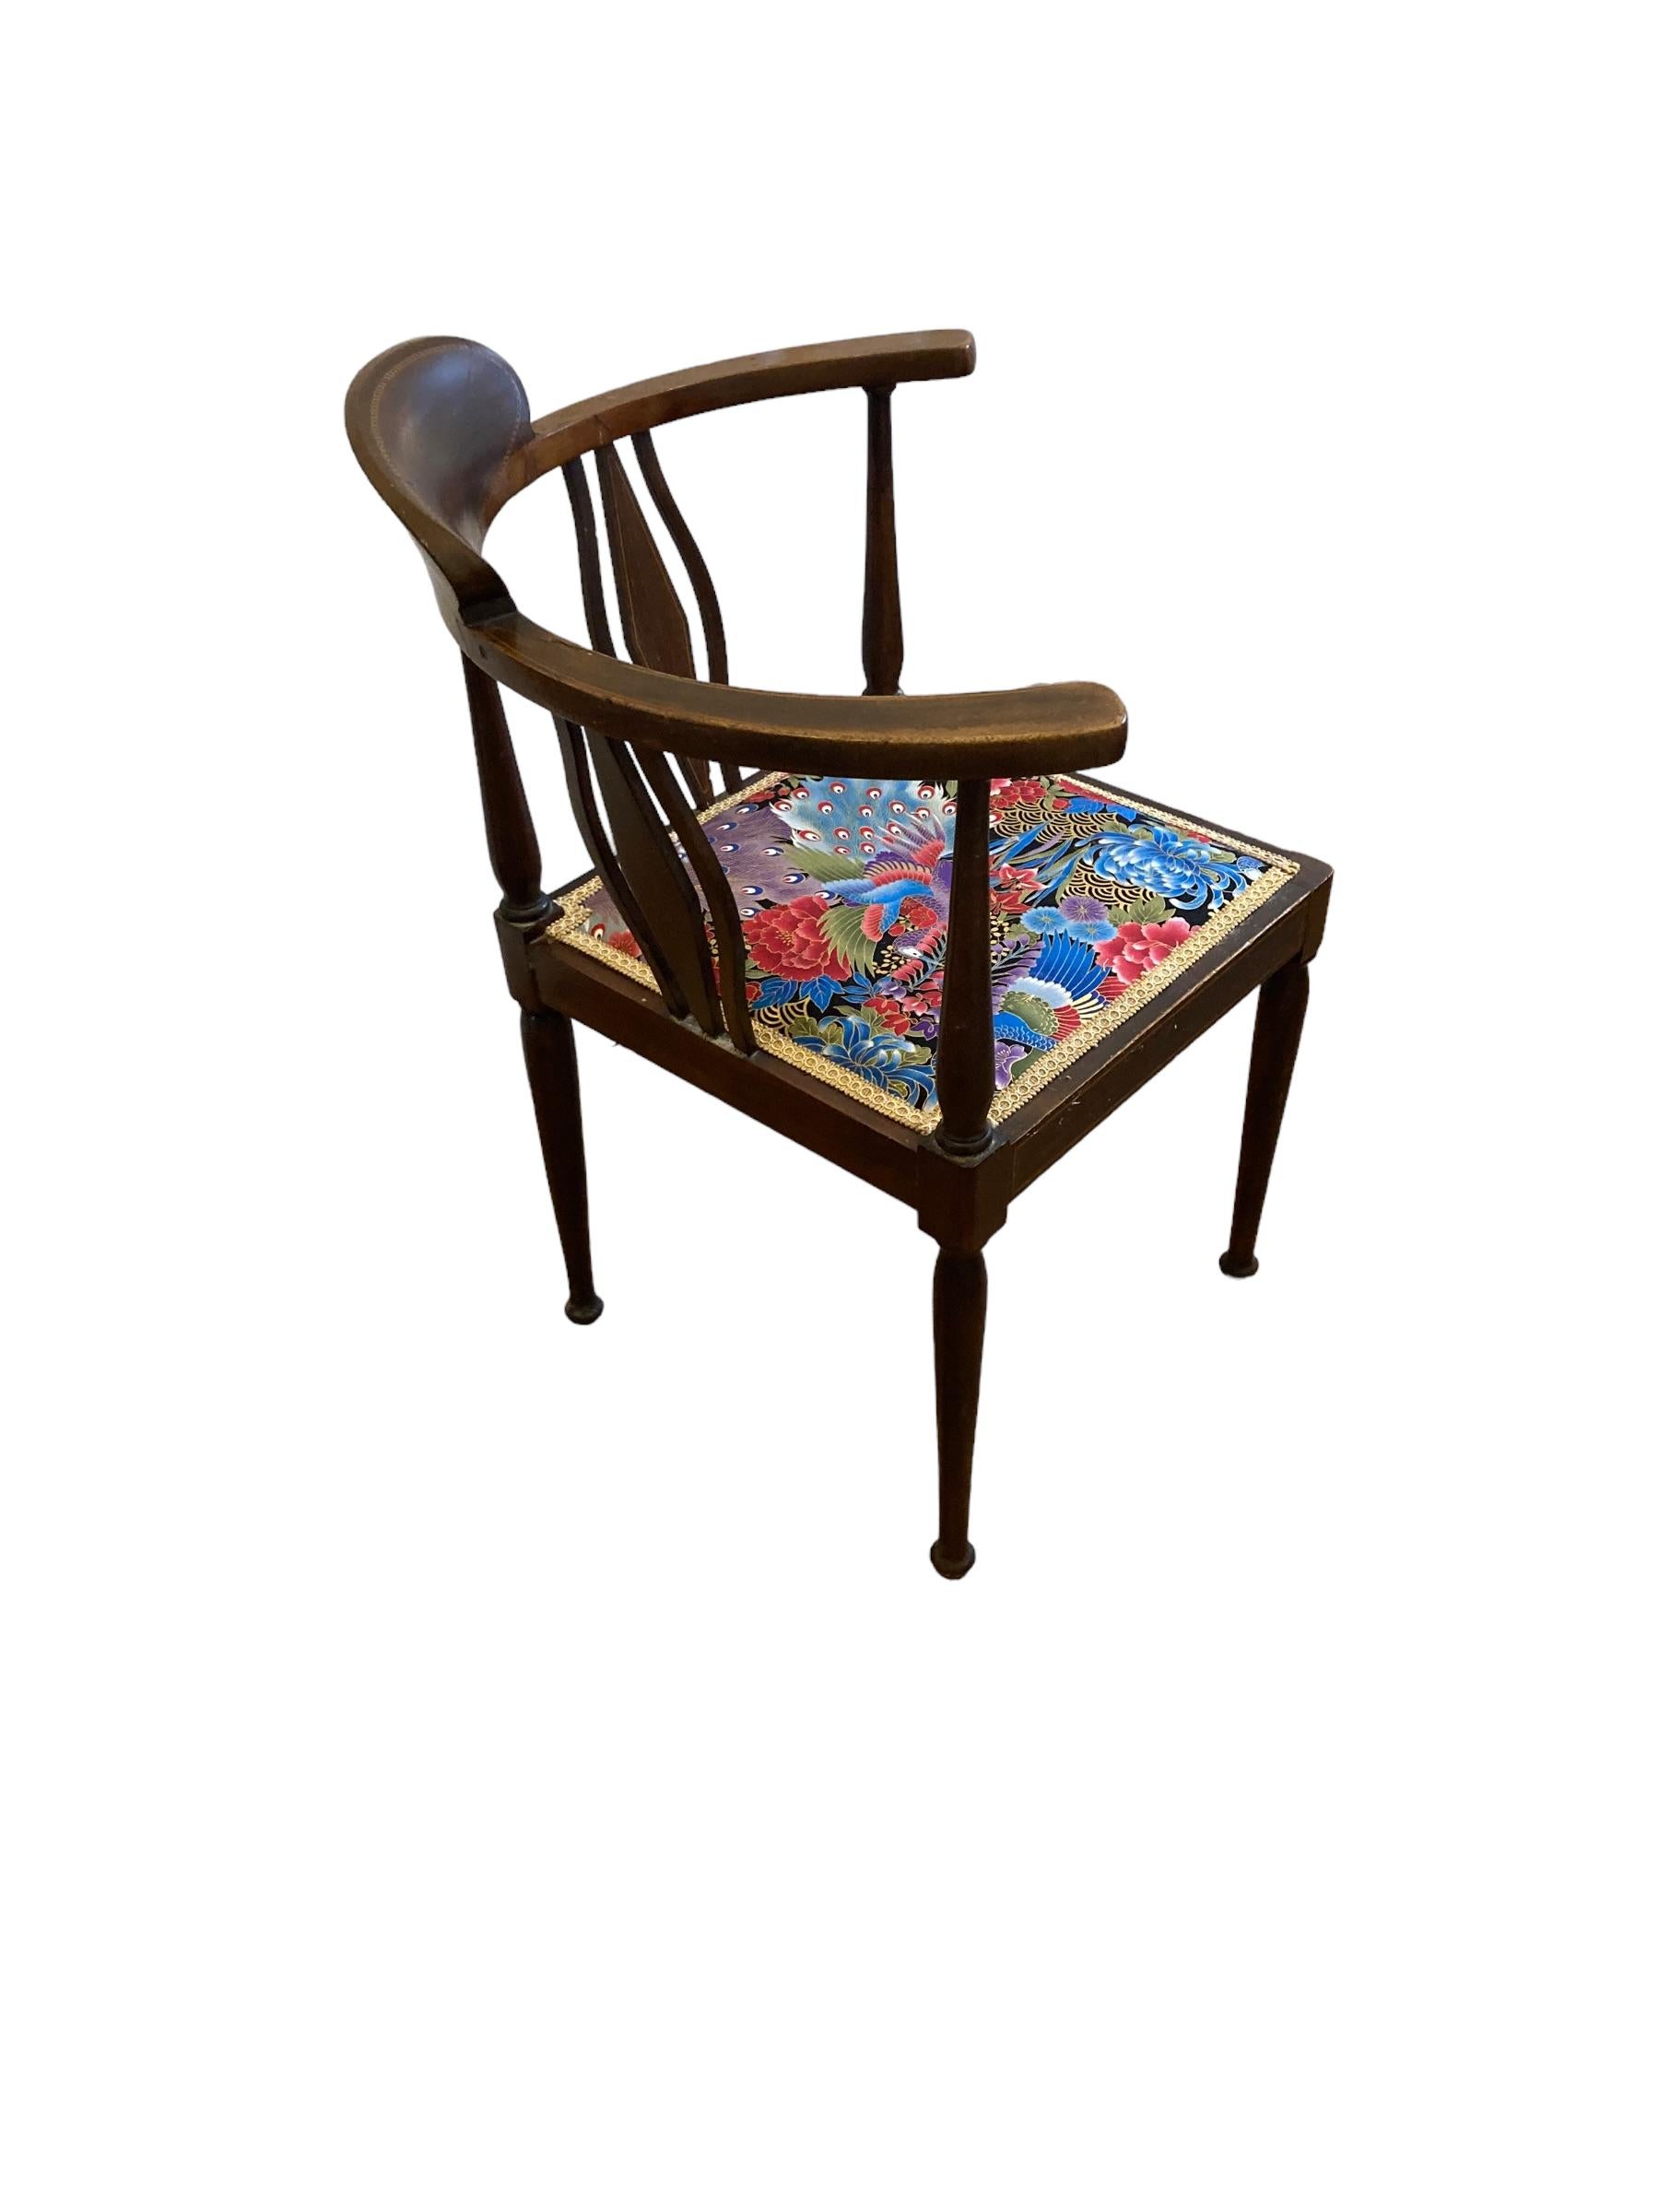 Edwardian Inlaid Corner Chair 1900's In Good Condition For Sale In Bishop's Stortford, GB